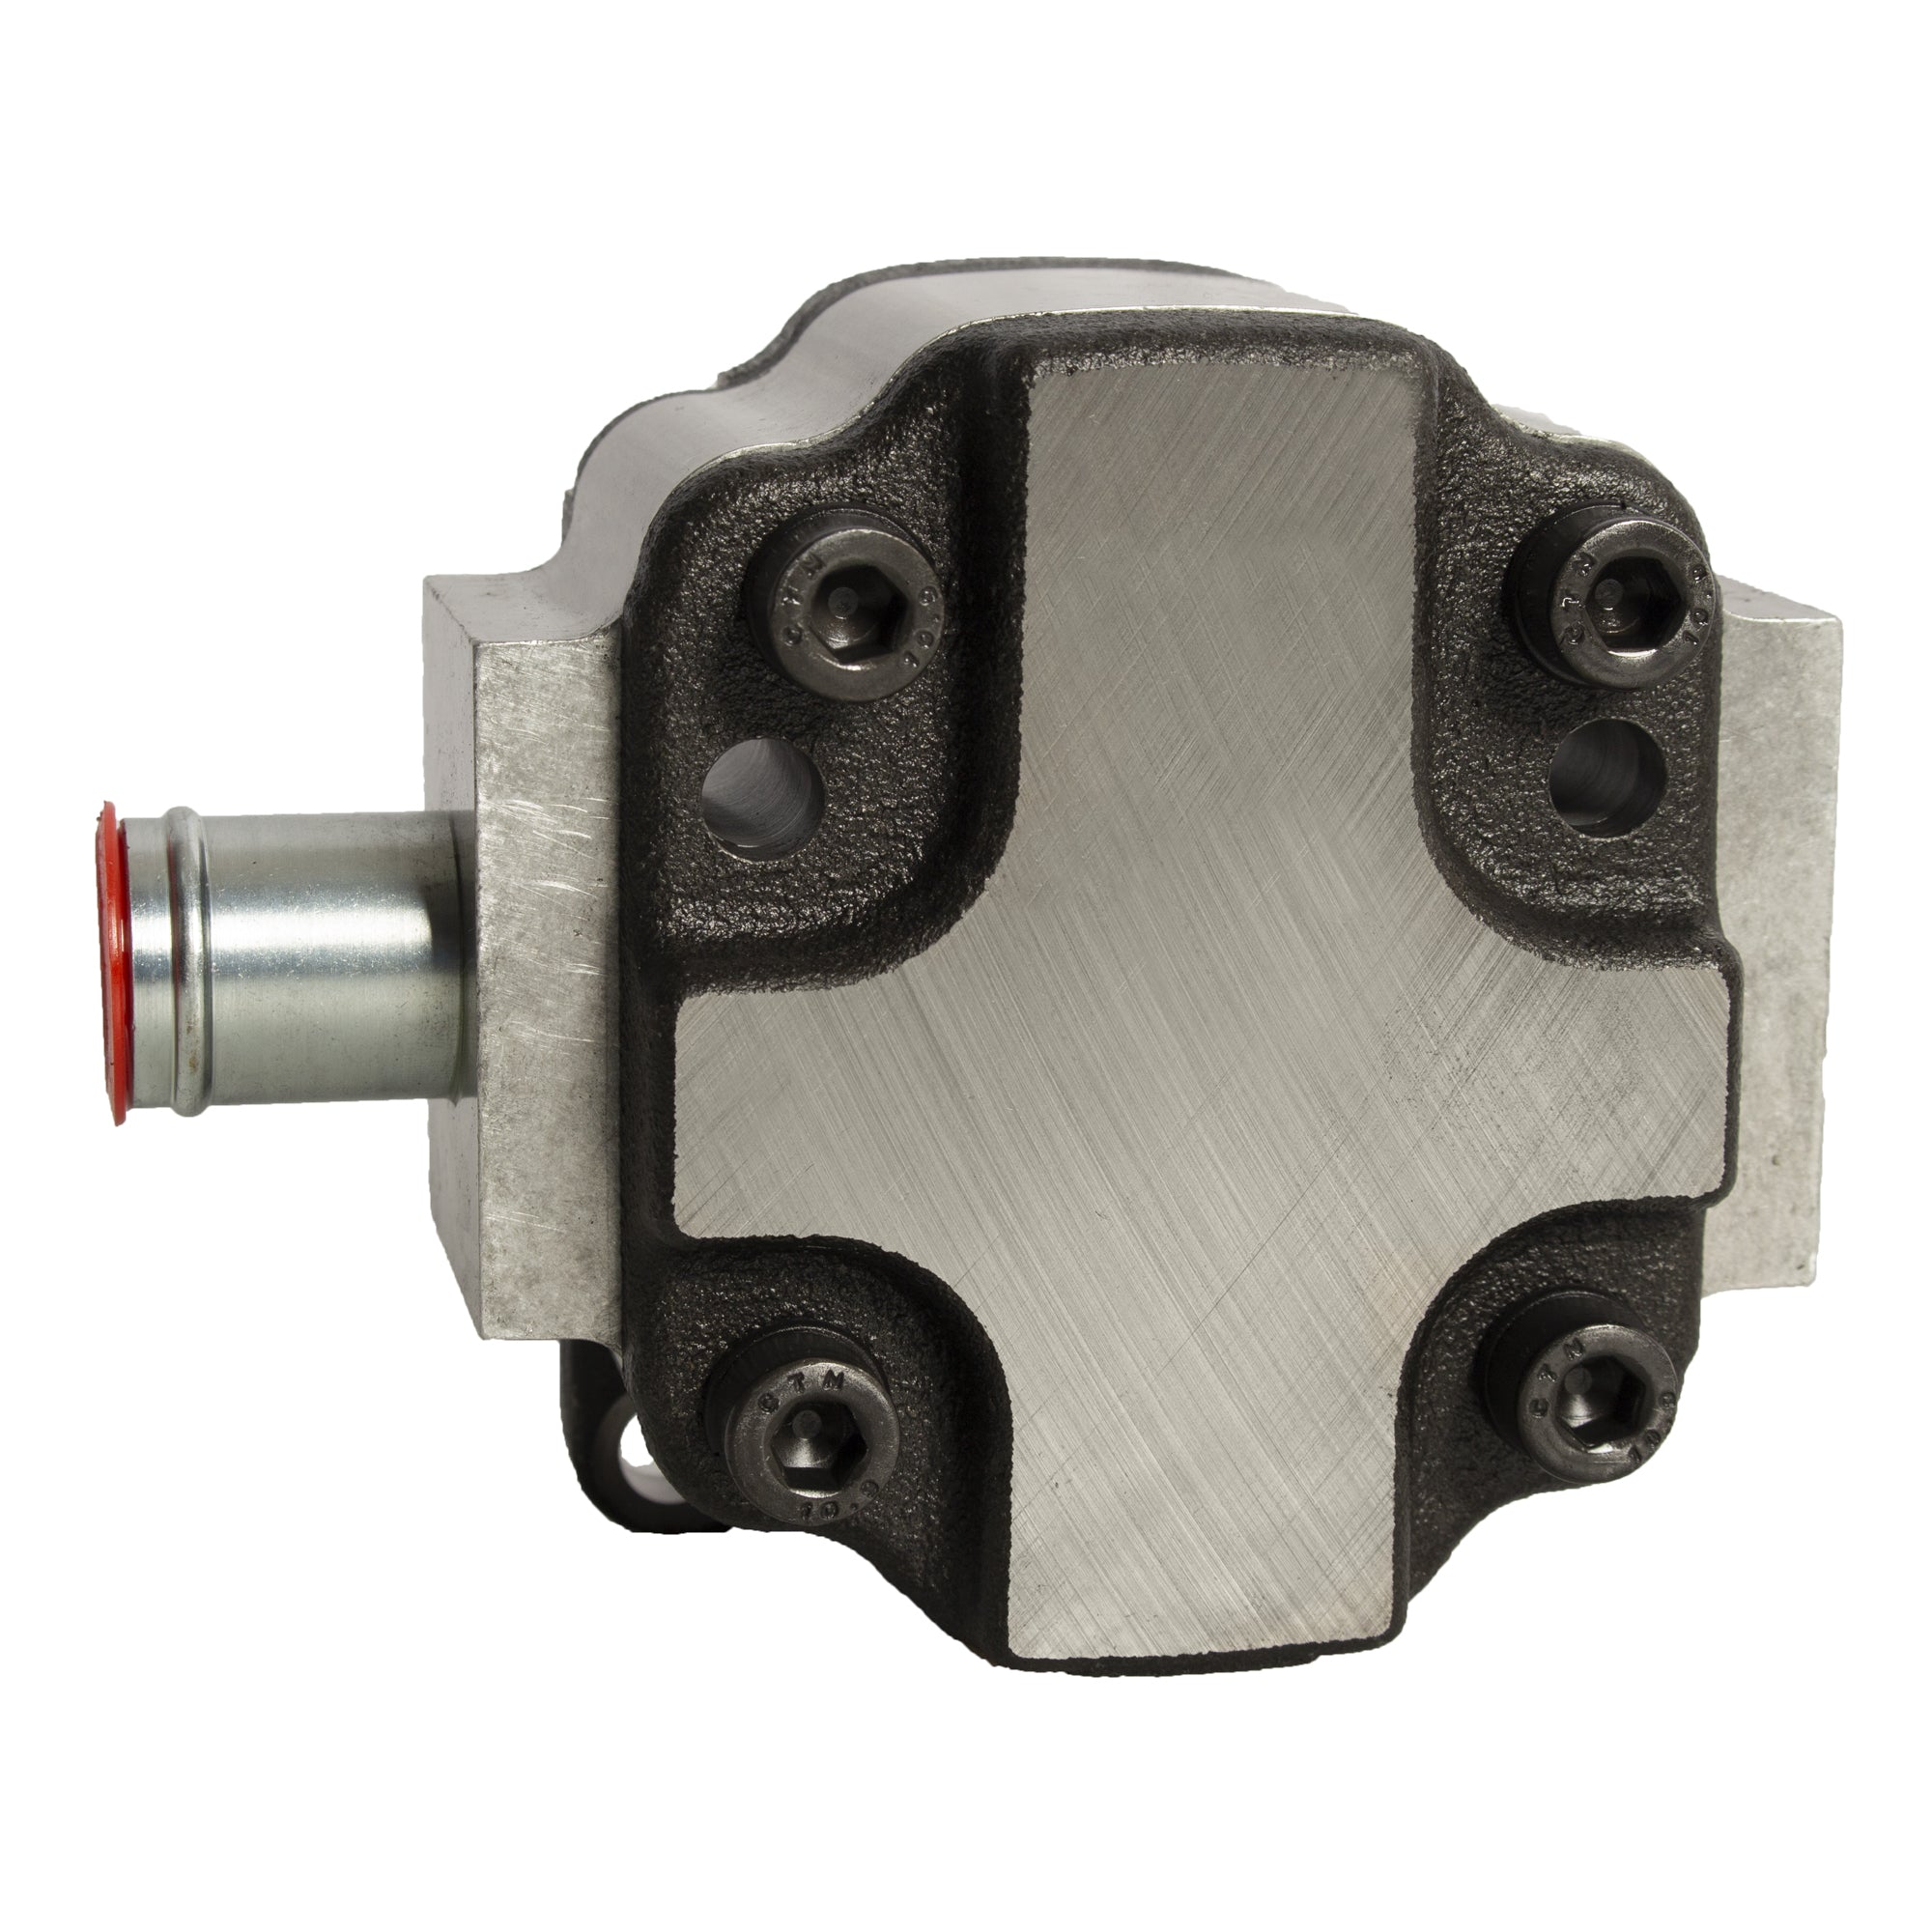 Hydraulic Pump Replacement for JOHN DEERE 1023E 1025R 60D 260 LVA19035